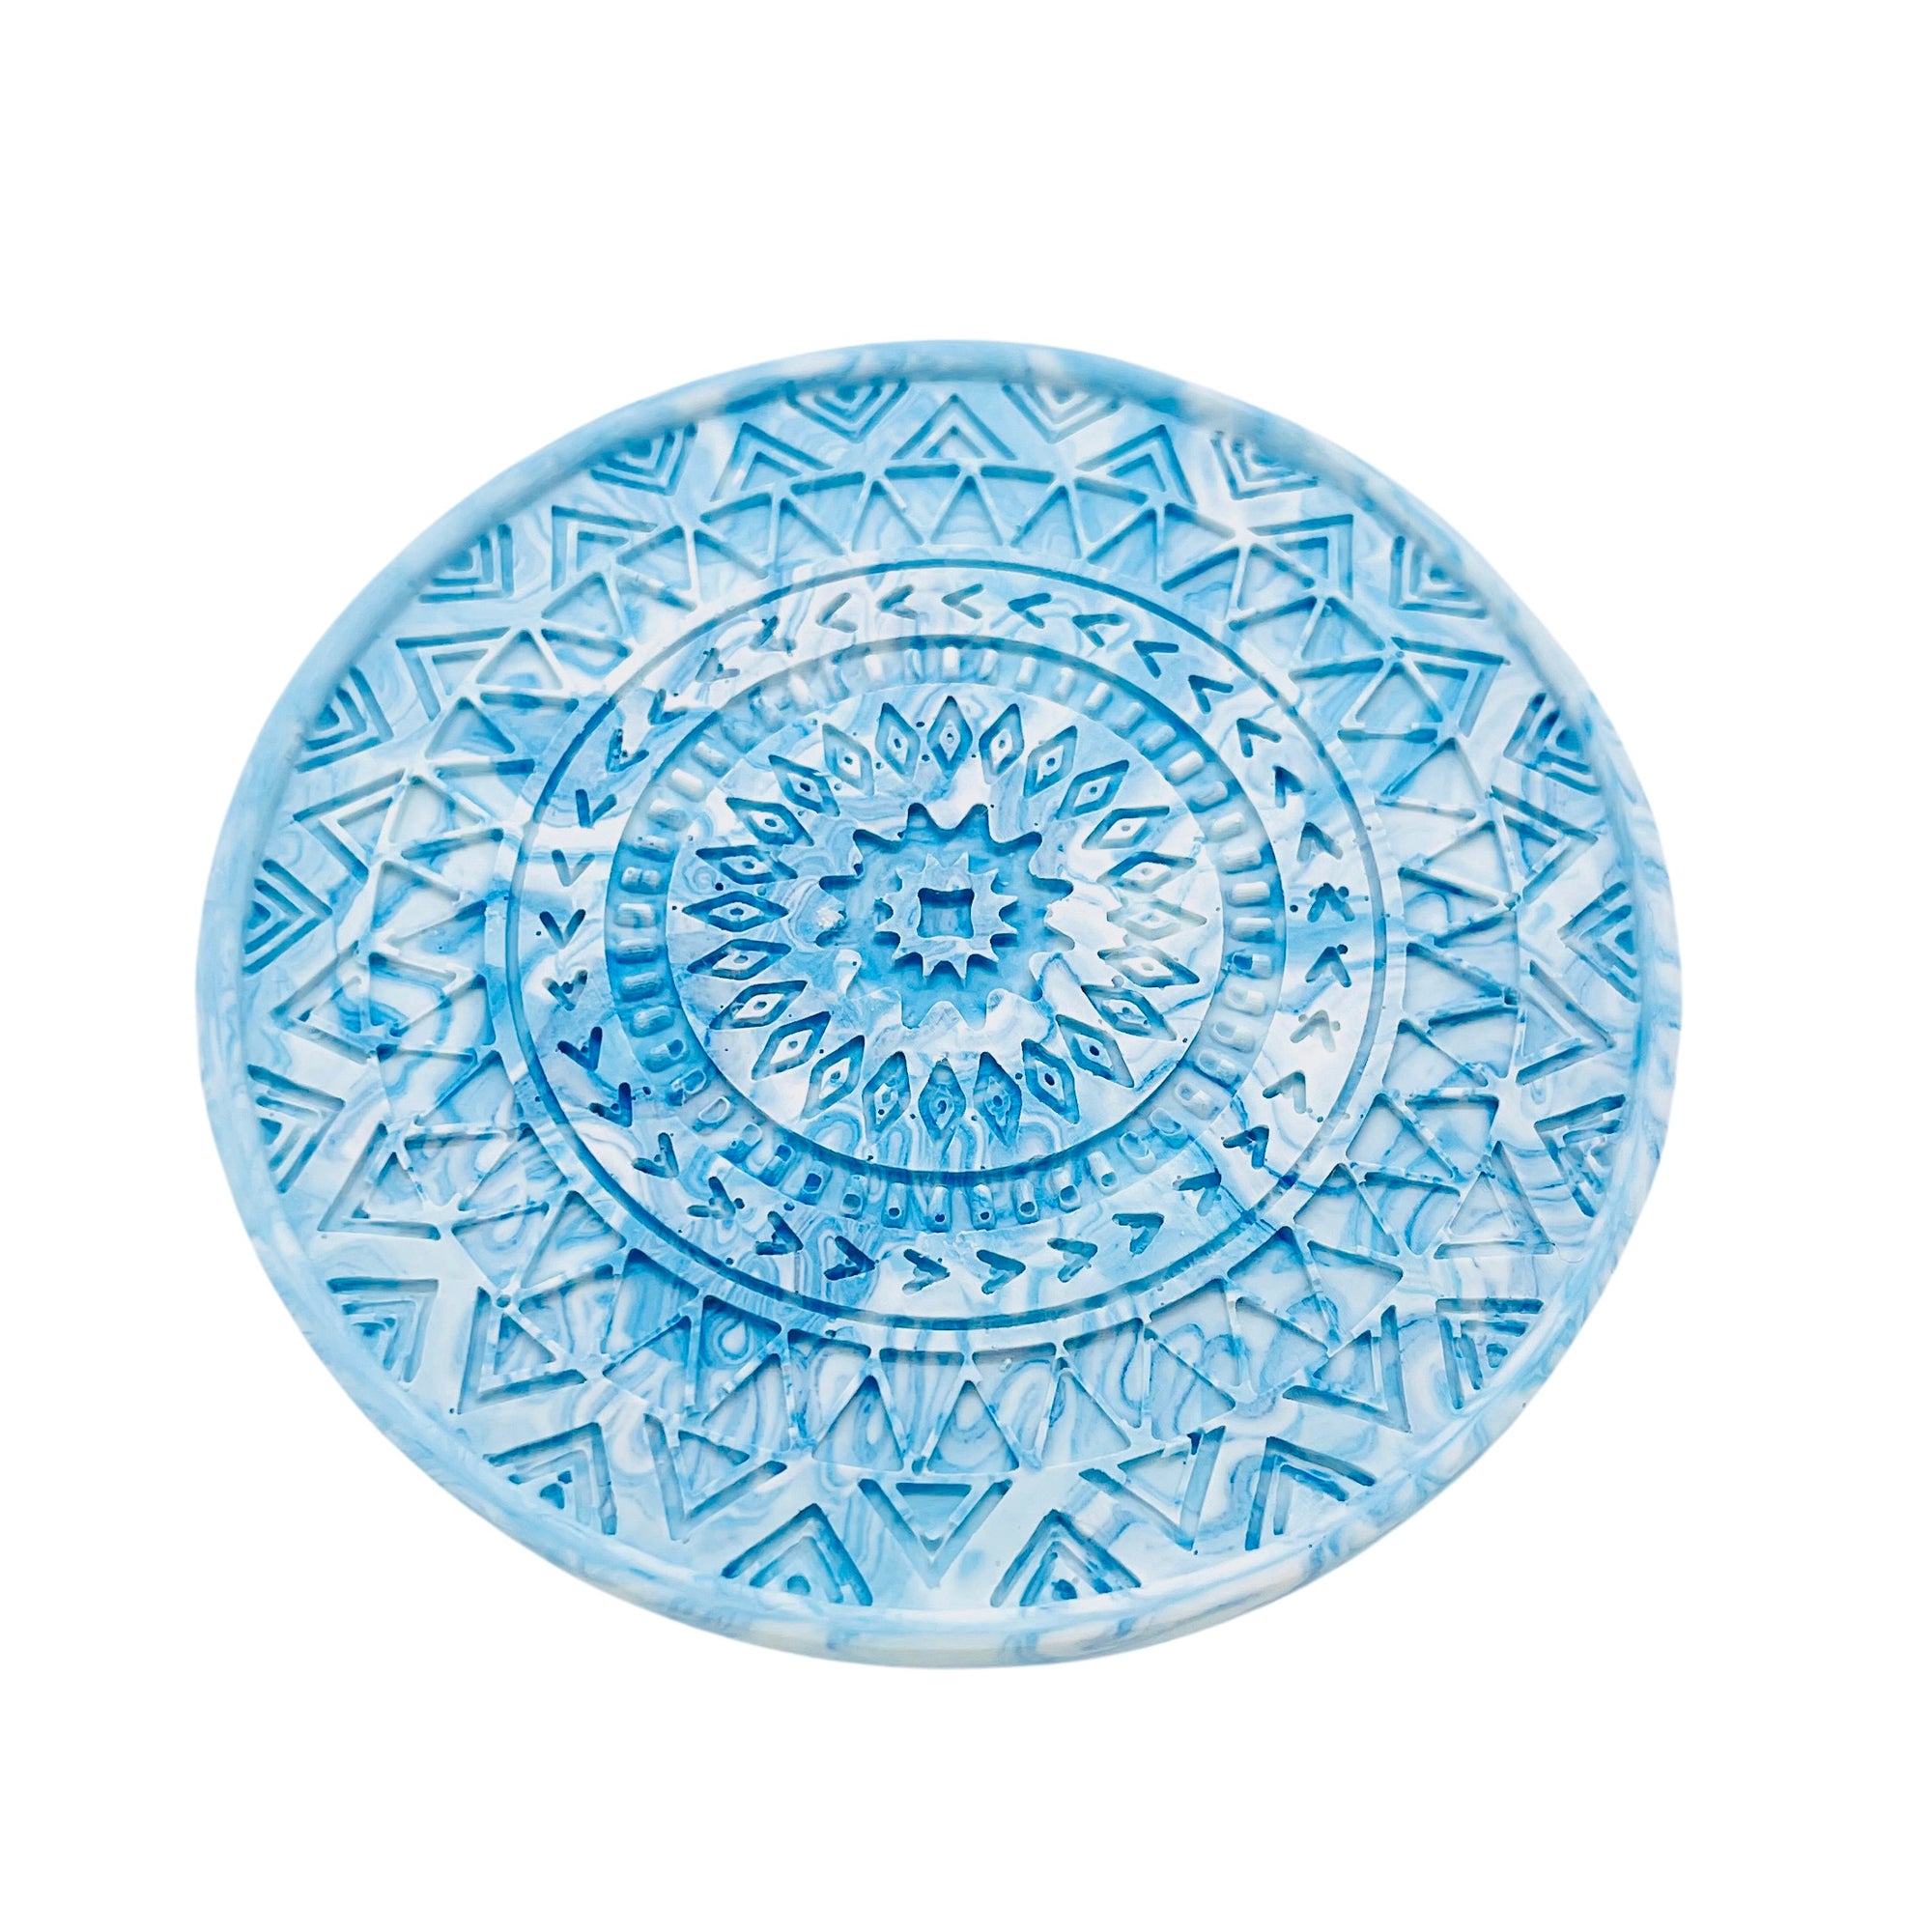  circular mandela Jesmonite coaster measuring 9.3cm in diameter and 0.8 cm in height marbled with baby blue pigment.